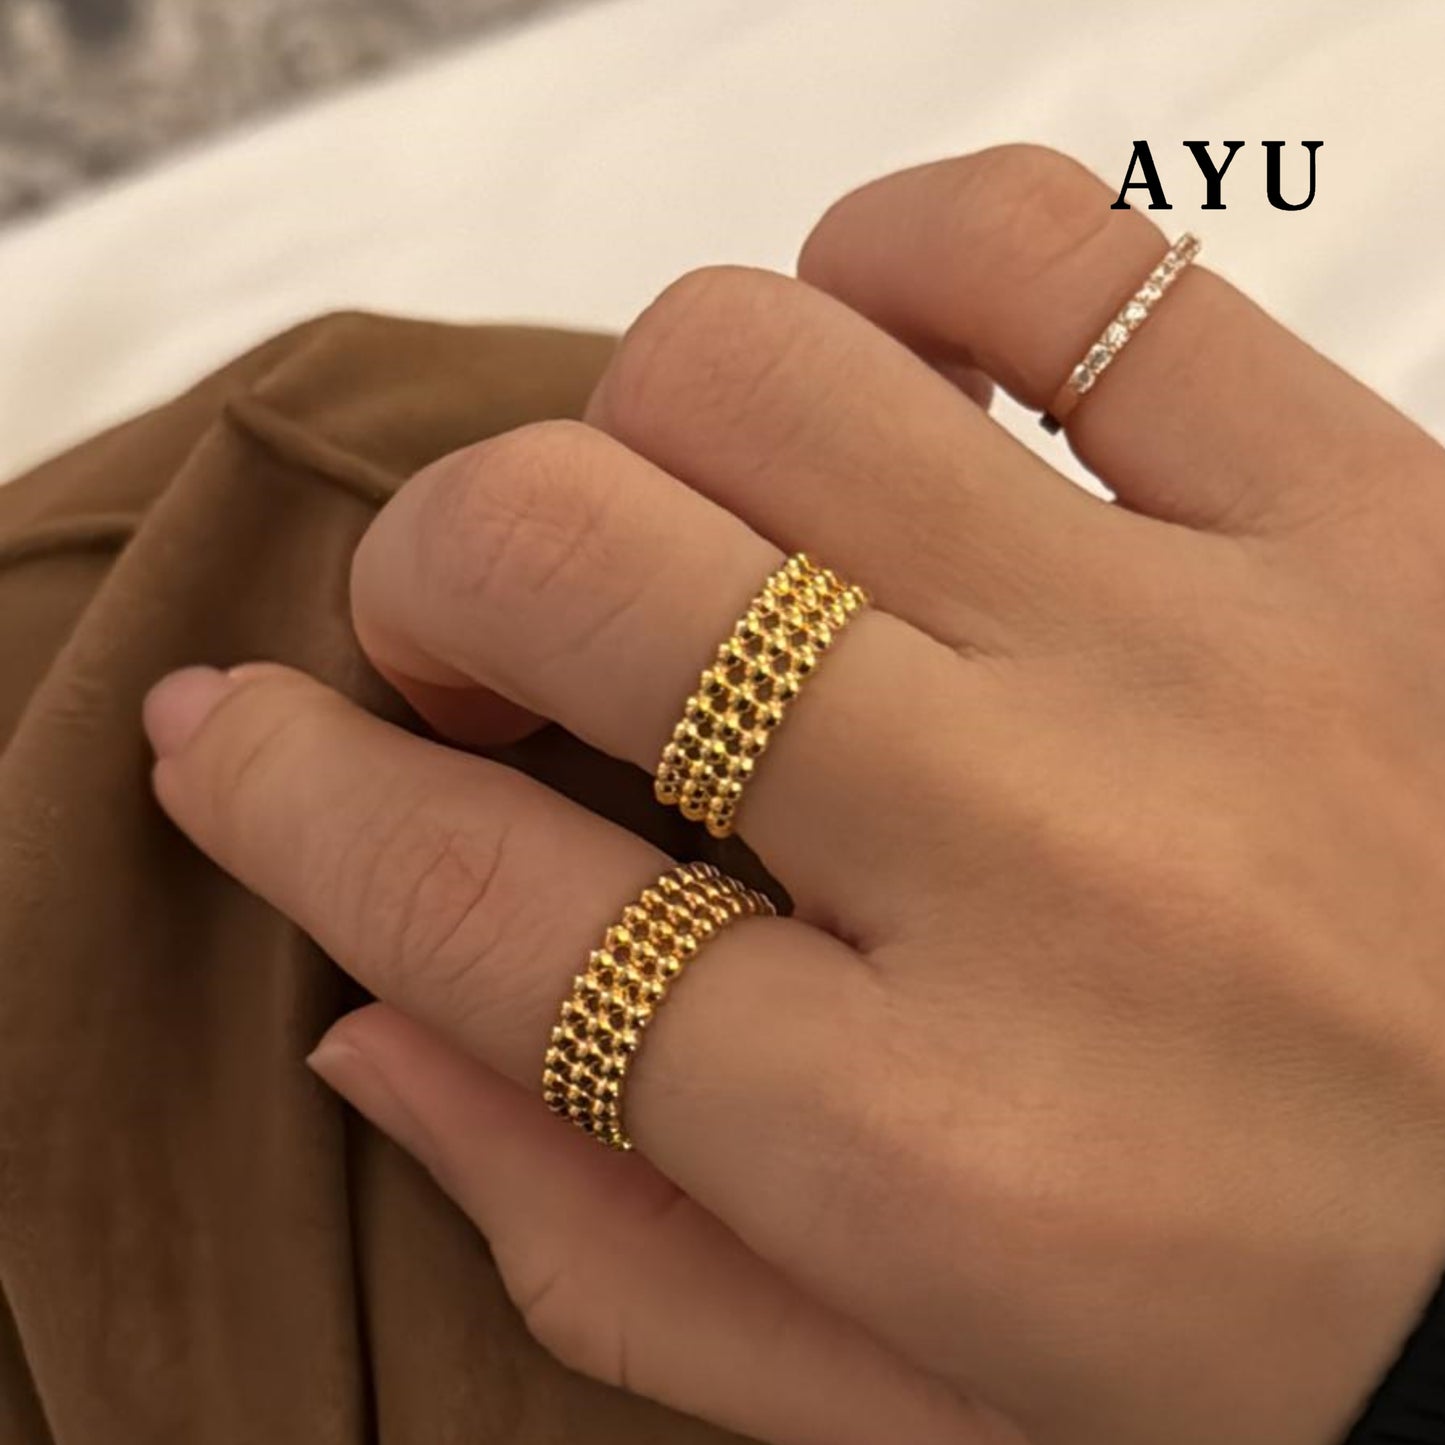 AYU Cincin Emas-Gold Triple Pepper Beads Stack 16k Yellow Gold